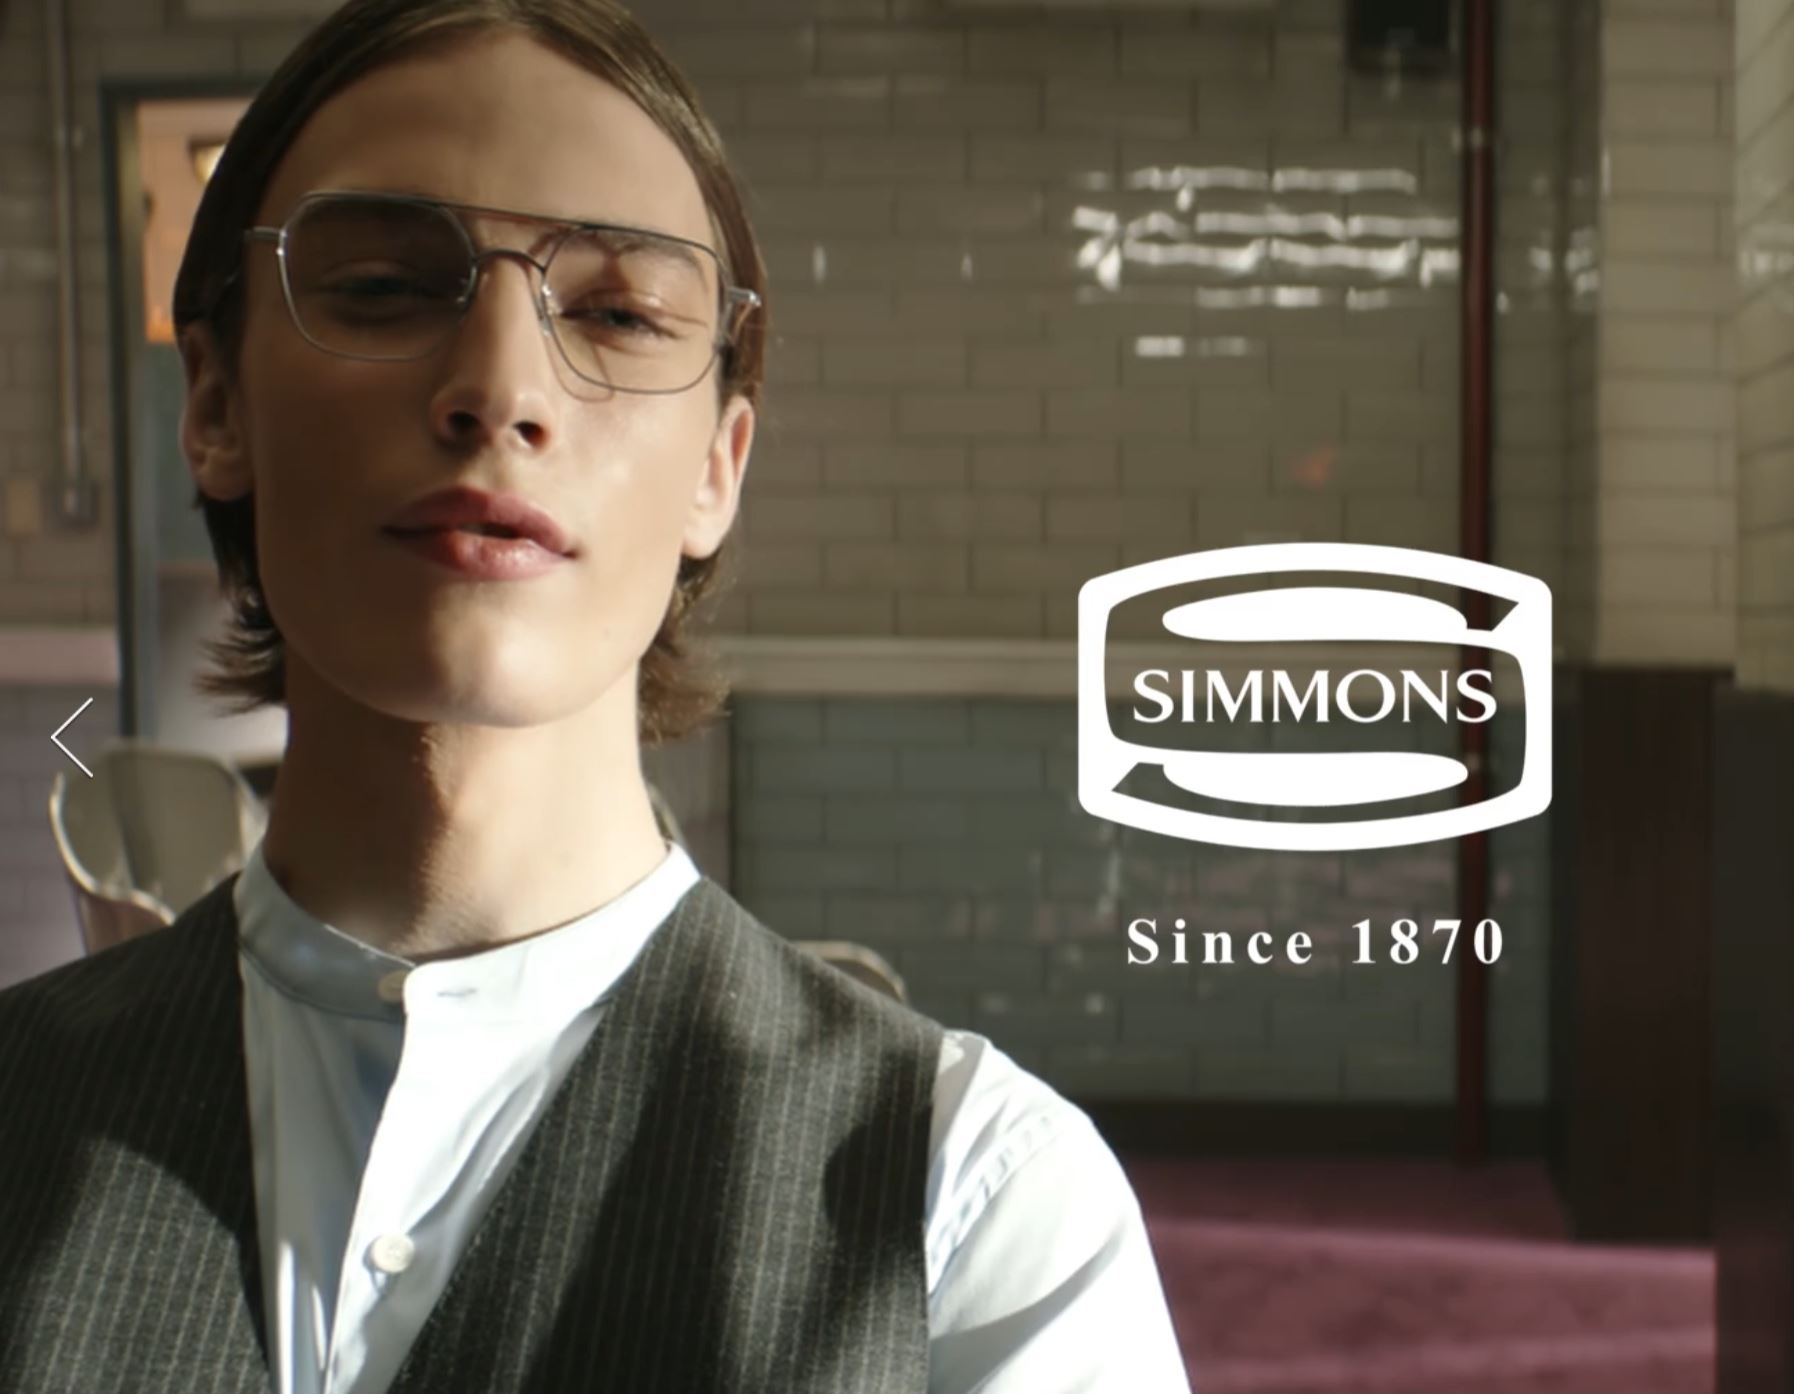 SIMMONS AD